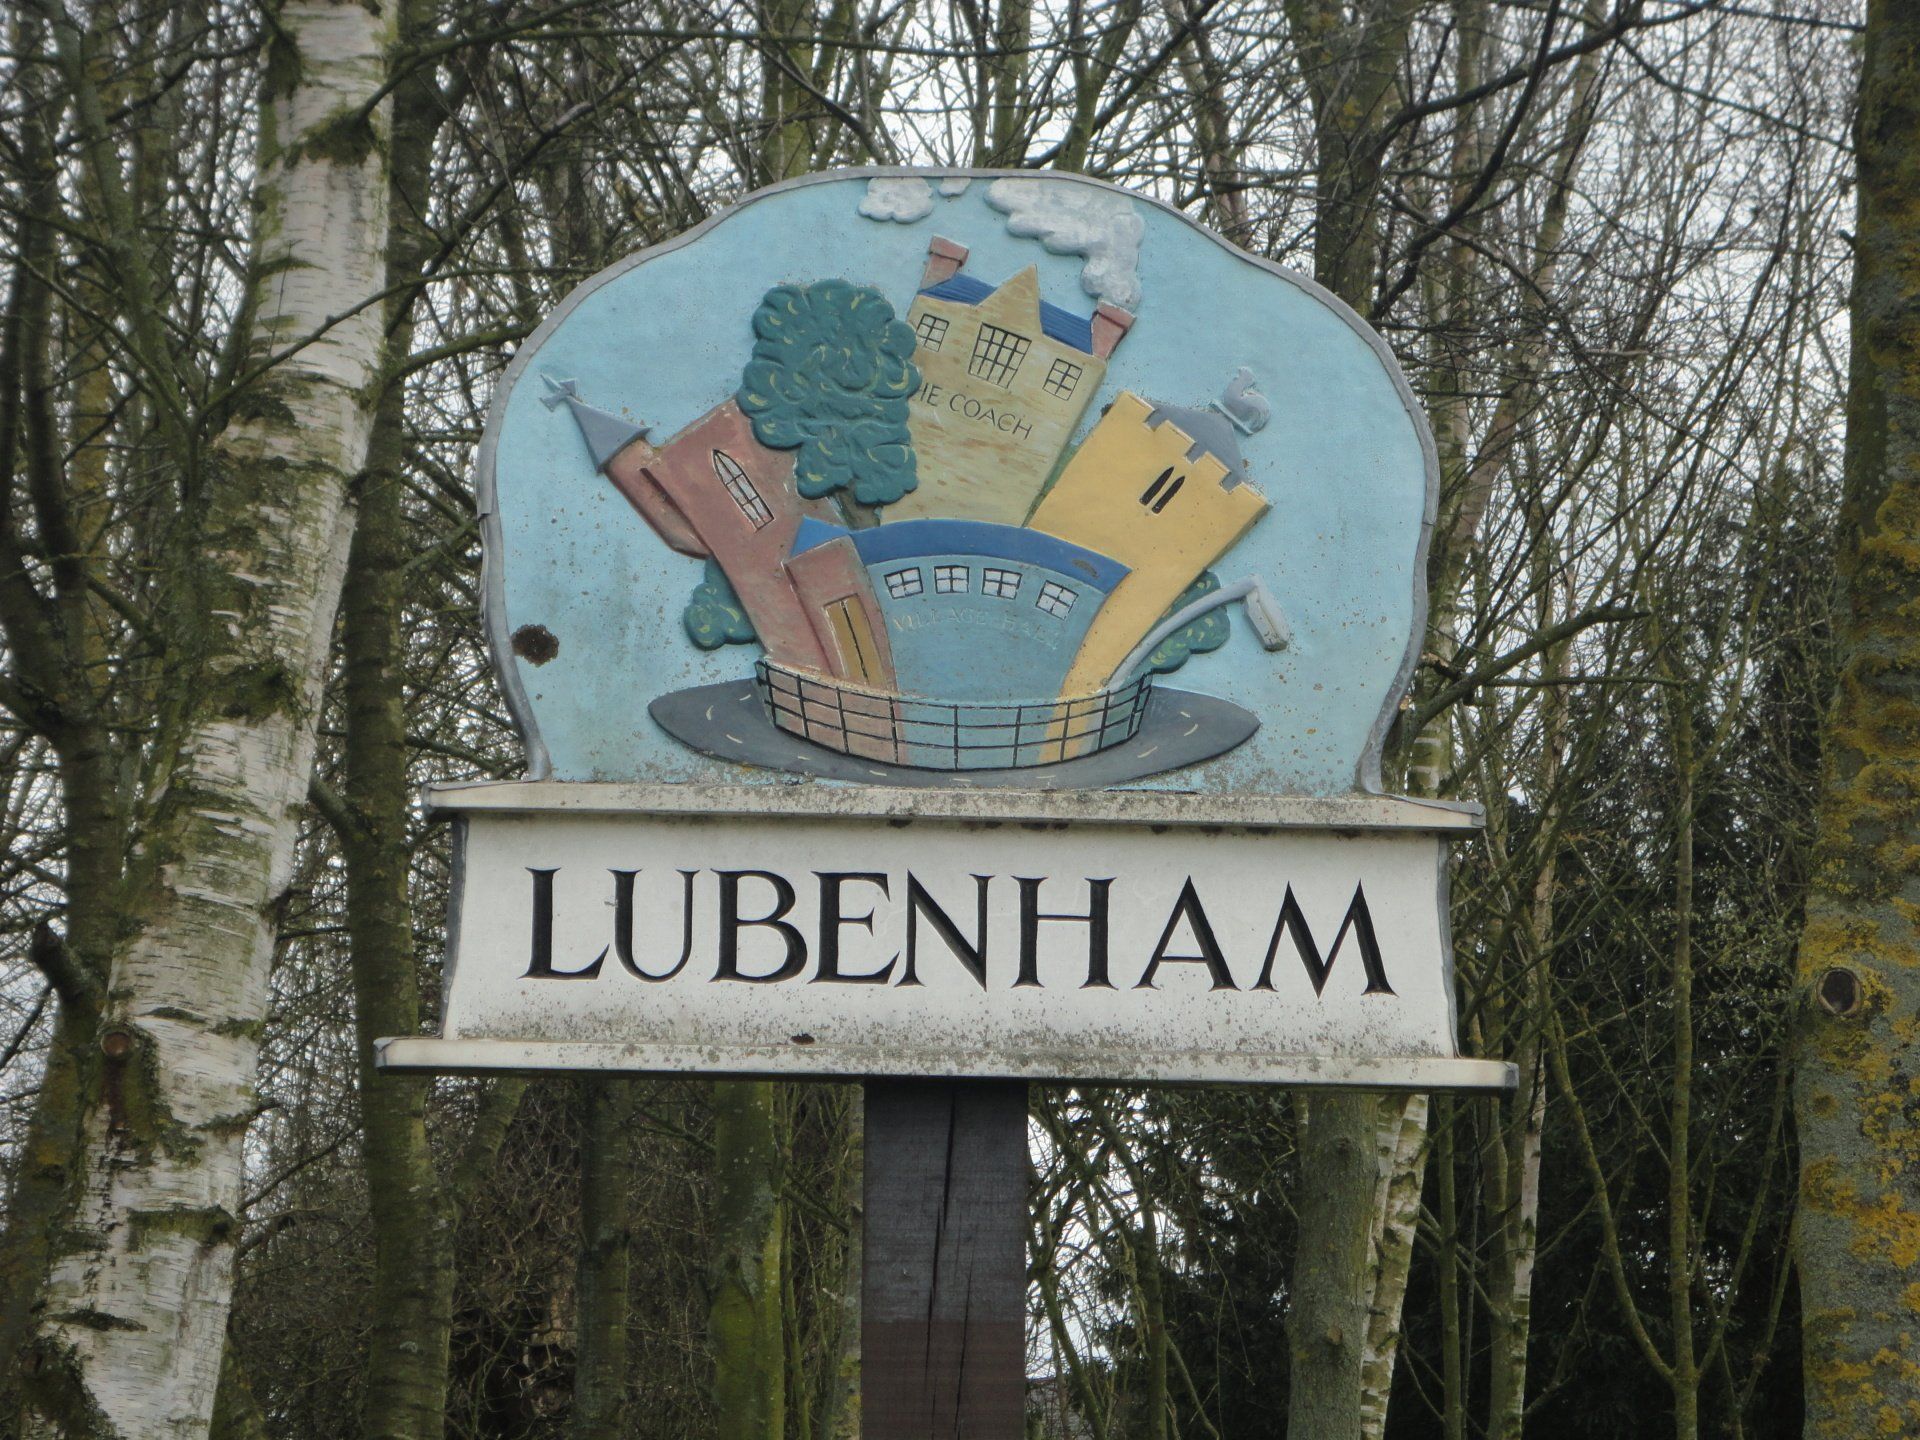 Lubenham